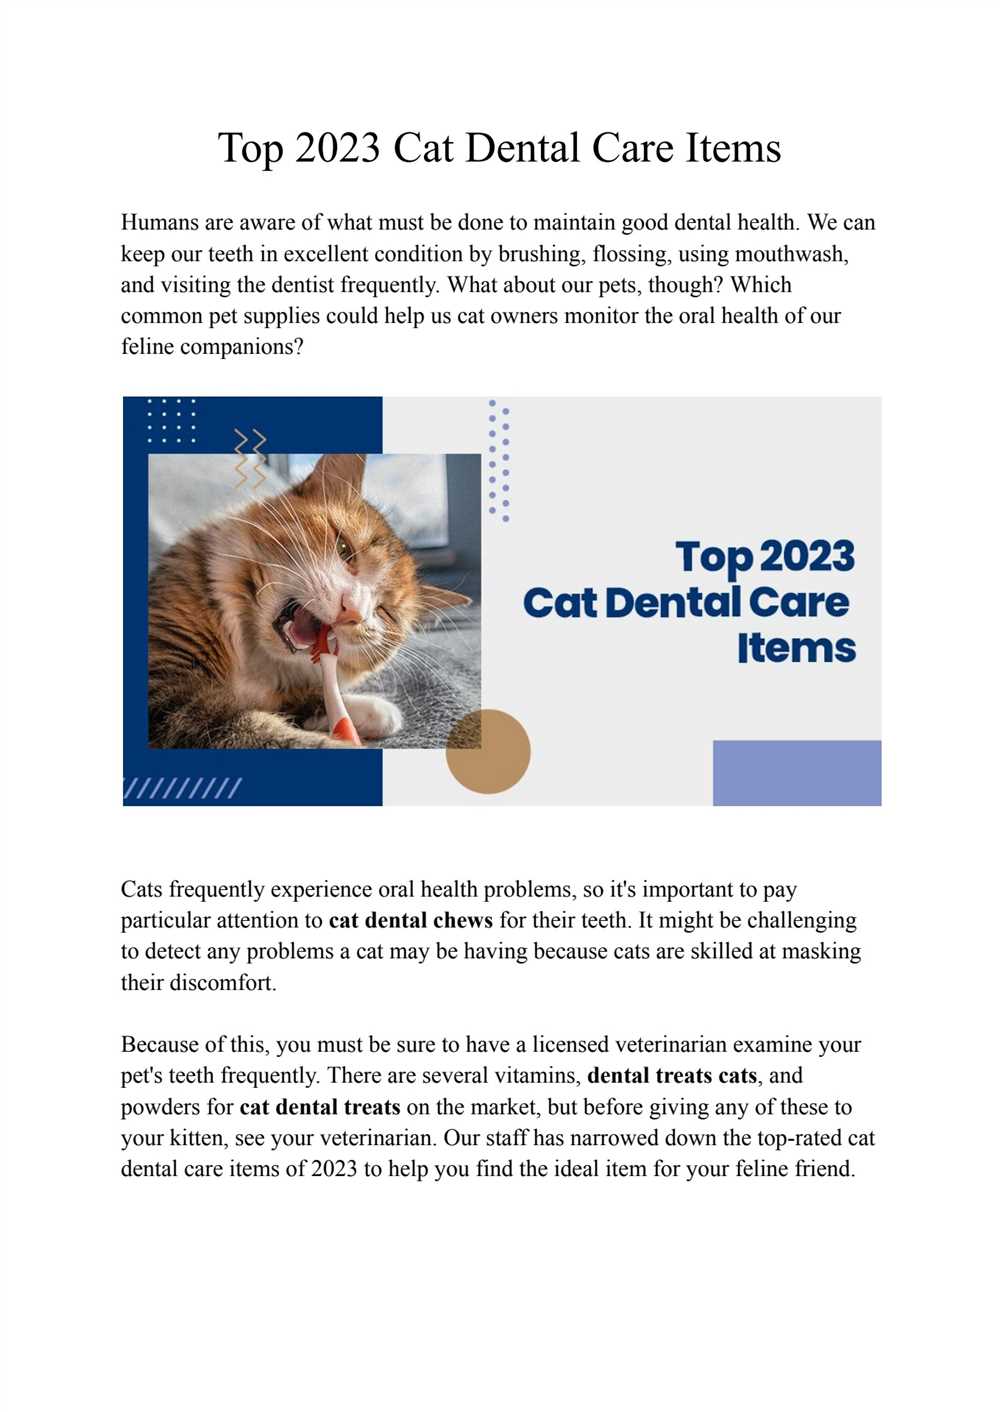 Improve Your Cat's Oral Health